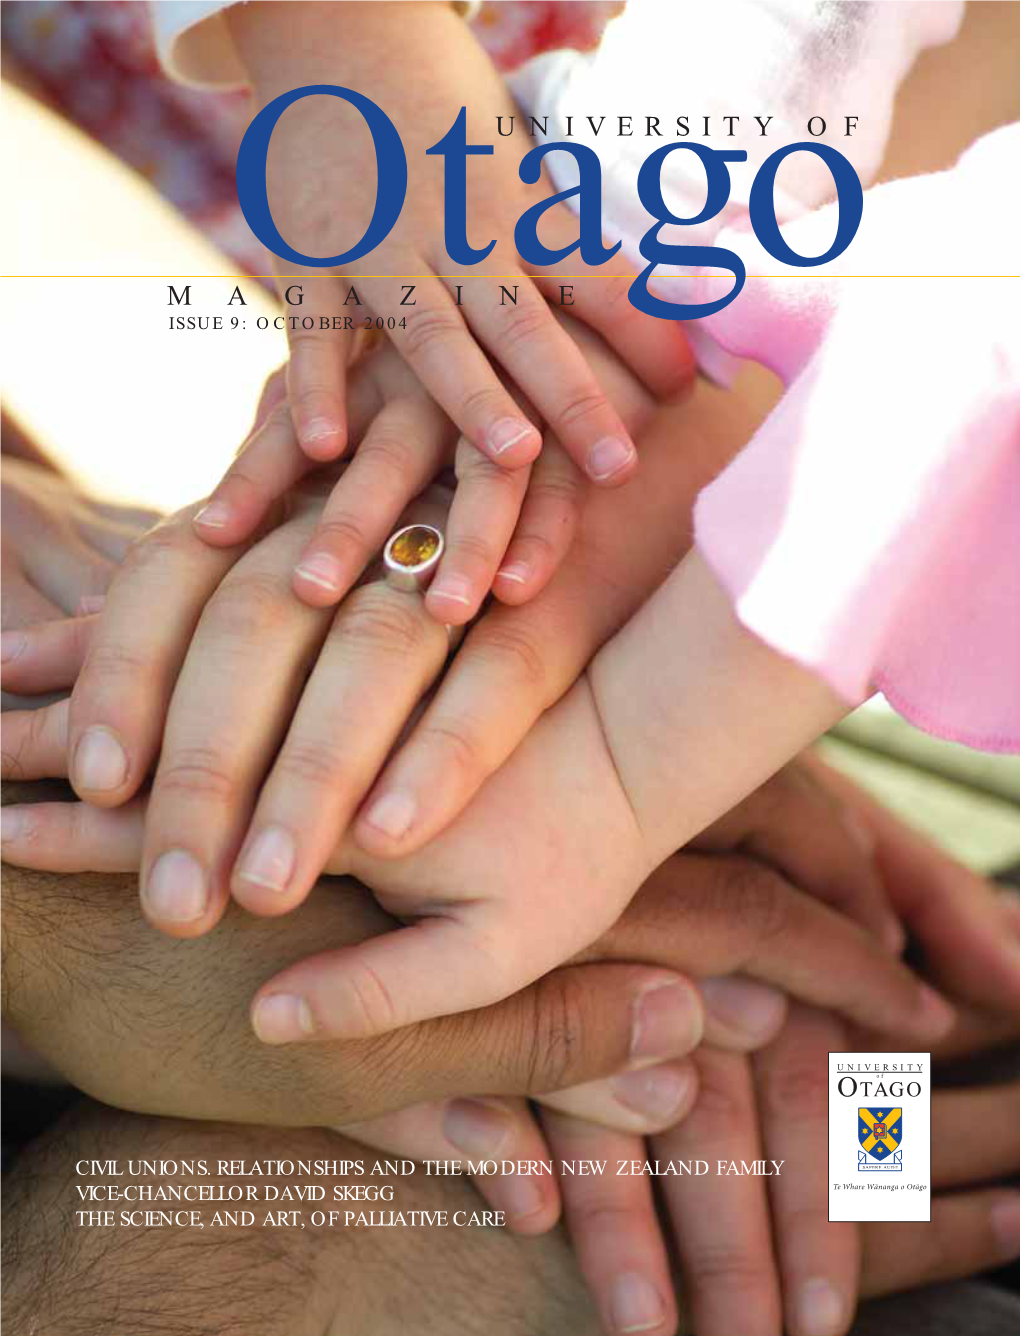 Issue 09 of the University of Otago Magazine